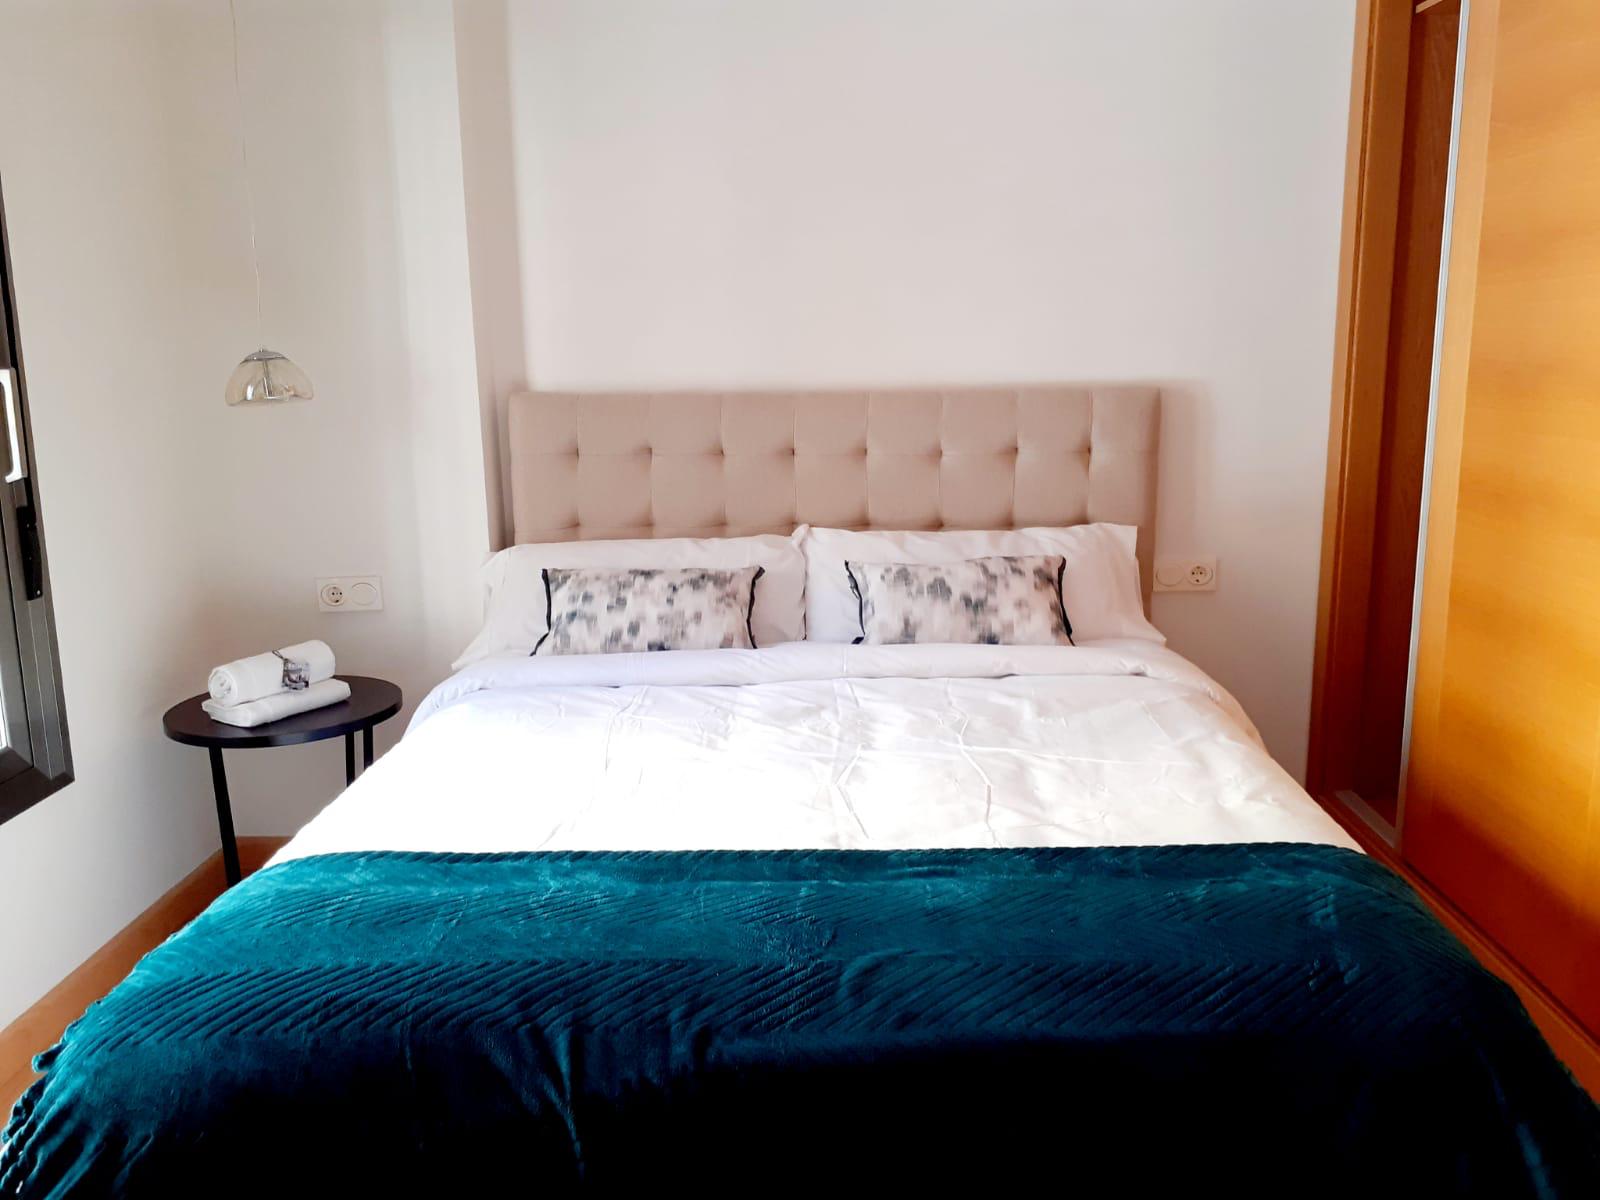 Apartamento 1 dorm en Malaga centro - thumb - mibgroup.es